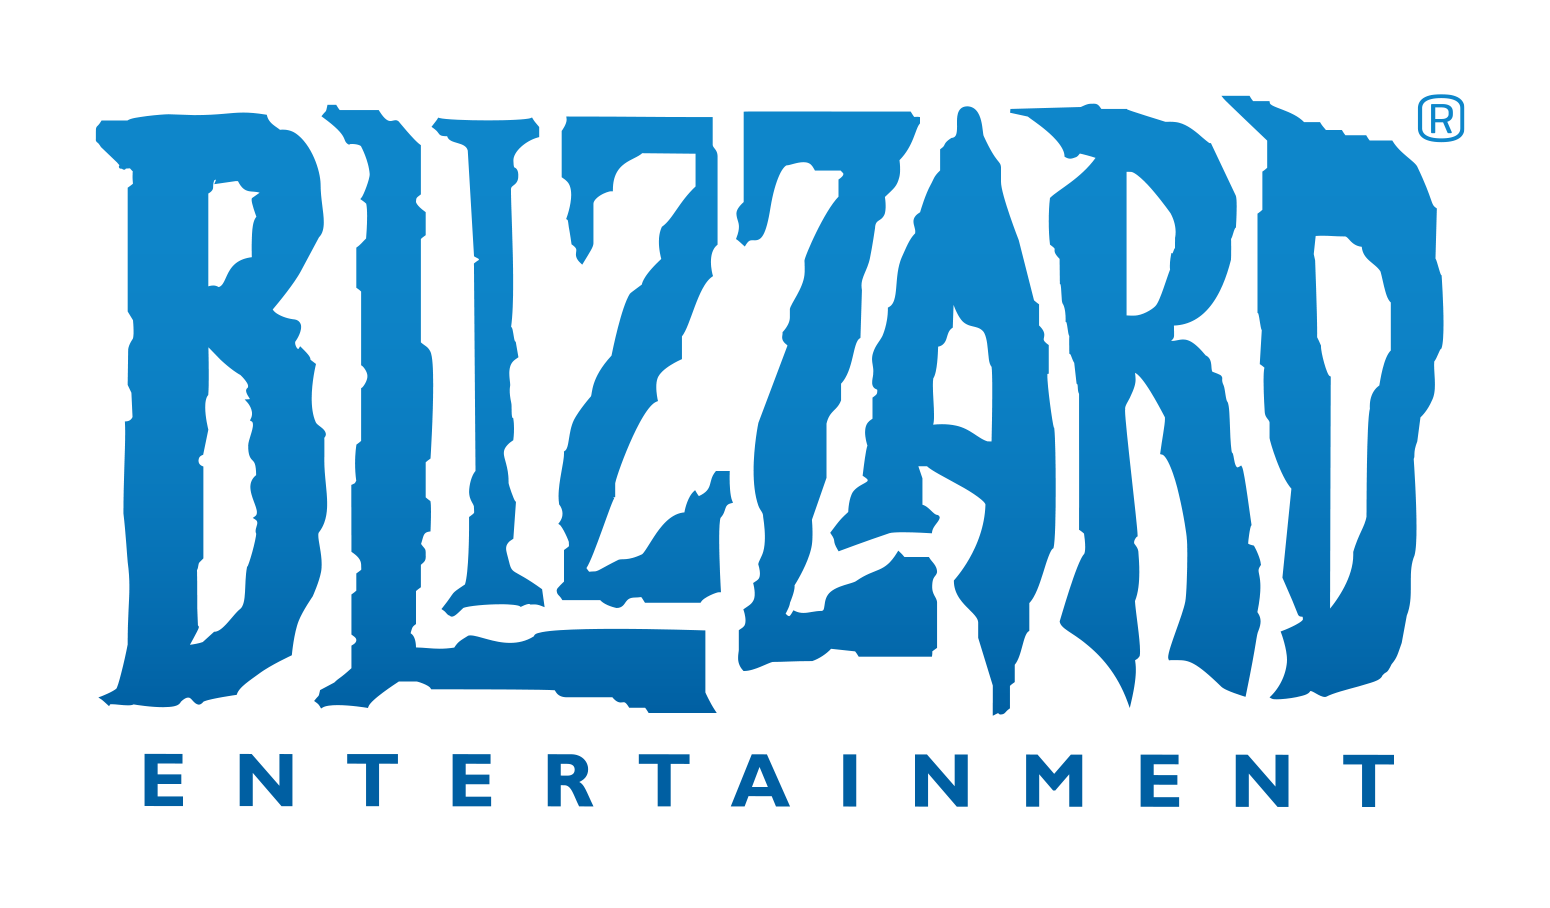 Blizzard Entertainment Company Logo